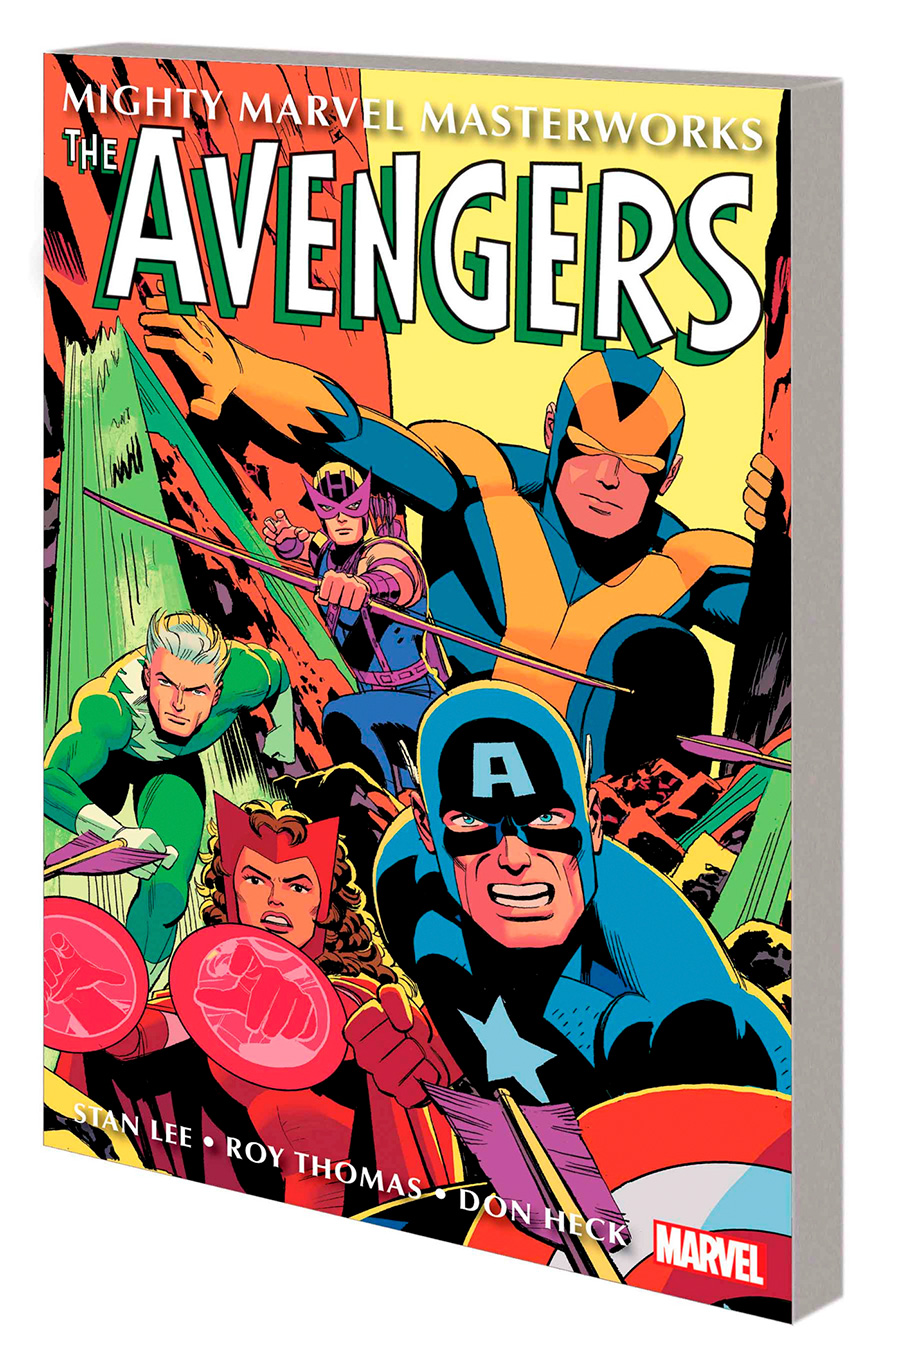 Mighty Marvel Masterworks Avengers Vol 4 The Sign Of The Serpent GN Book Market Leonardo Romero Cover